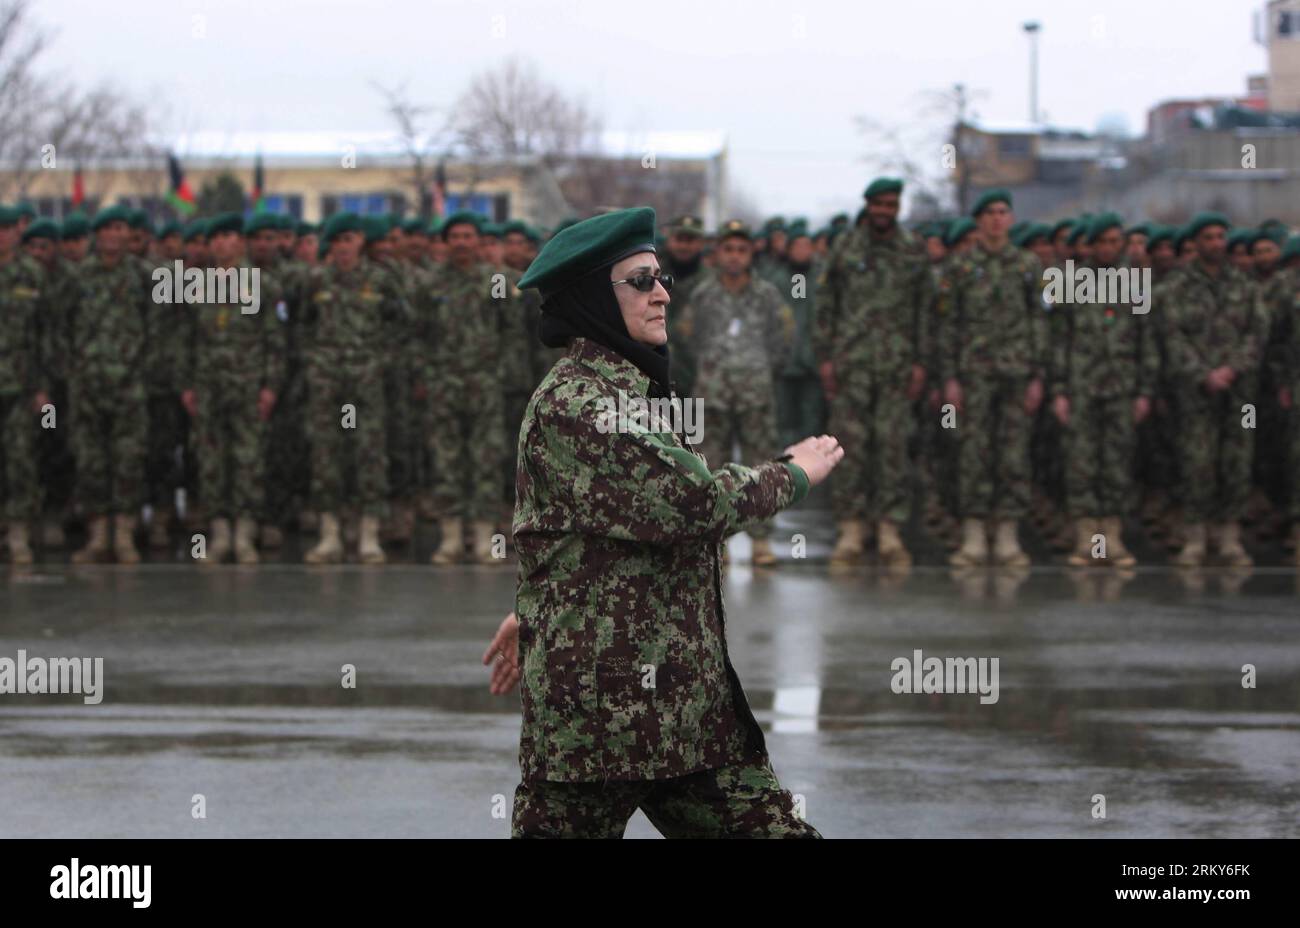 Bildnummer: 59155819  Datum: 31.01.2013  Copyright: imago/Xinhua (130131) -- KABUL, Jan. 31, 2013 (Xinhua) -- An Afghan woman officer marches during a graduation ceremony at the Kabul Military Training Center in Kabul, Afghanistan, on Jan. 31, 2013. A total of 1,400 soldiers graduated from Kabul Military Training Center (KMTC) on Thursday and were commissioned to Afghan National Army (ANA), General Aminullah Patyannai commander of KMTC said. (Xinhua/Ahmad Massoud) AFGHANISTAN-KABUL-SOLDIERS-GRADUATION PUBLICATIONxNOTxINxCHN Gesellschaft Militär Armee Soldat Ausbildung Militärausbildung Abschlu Stock Photo